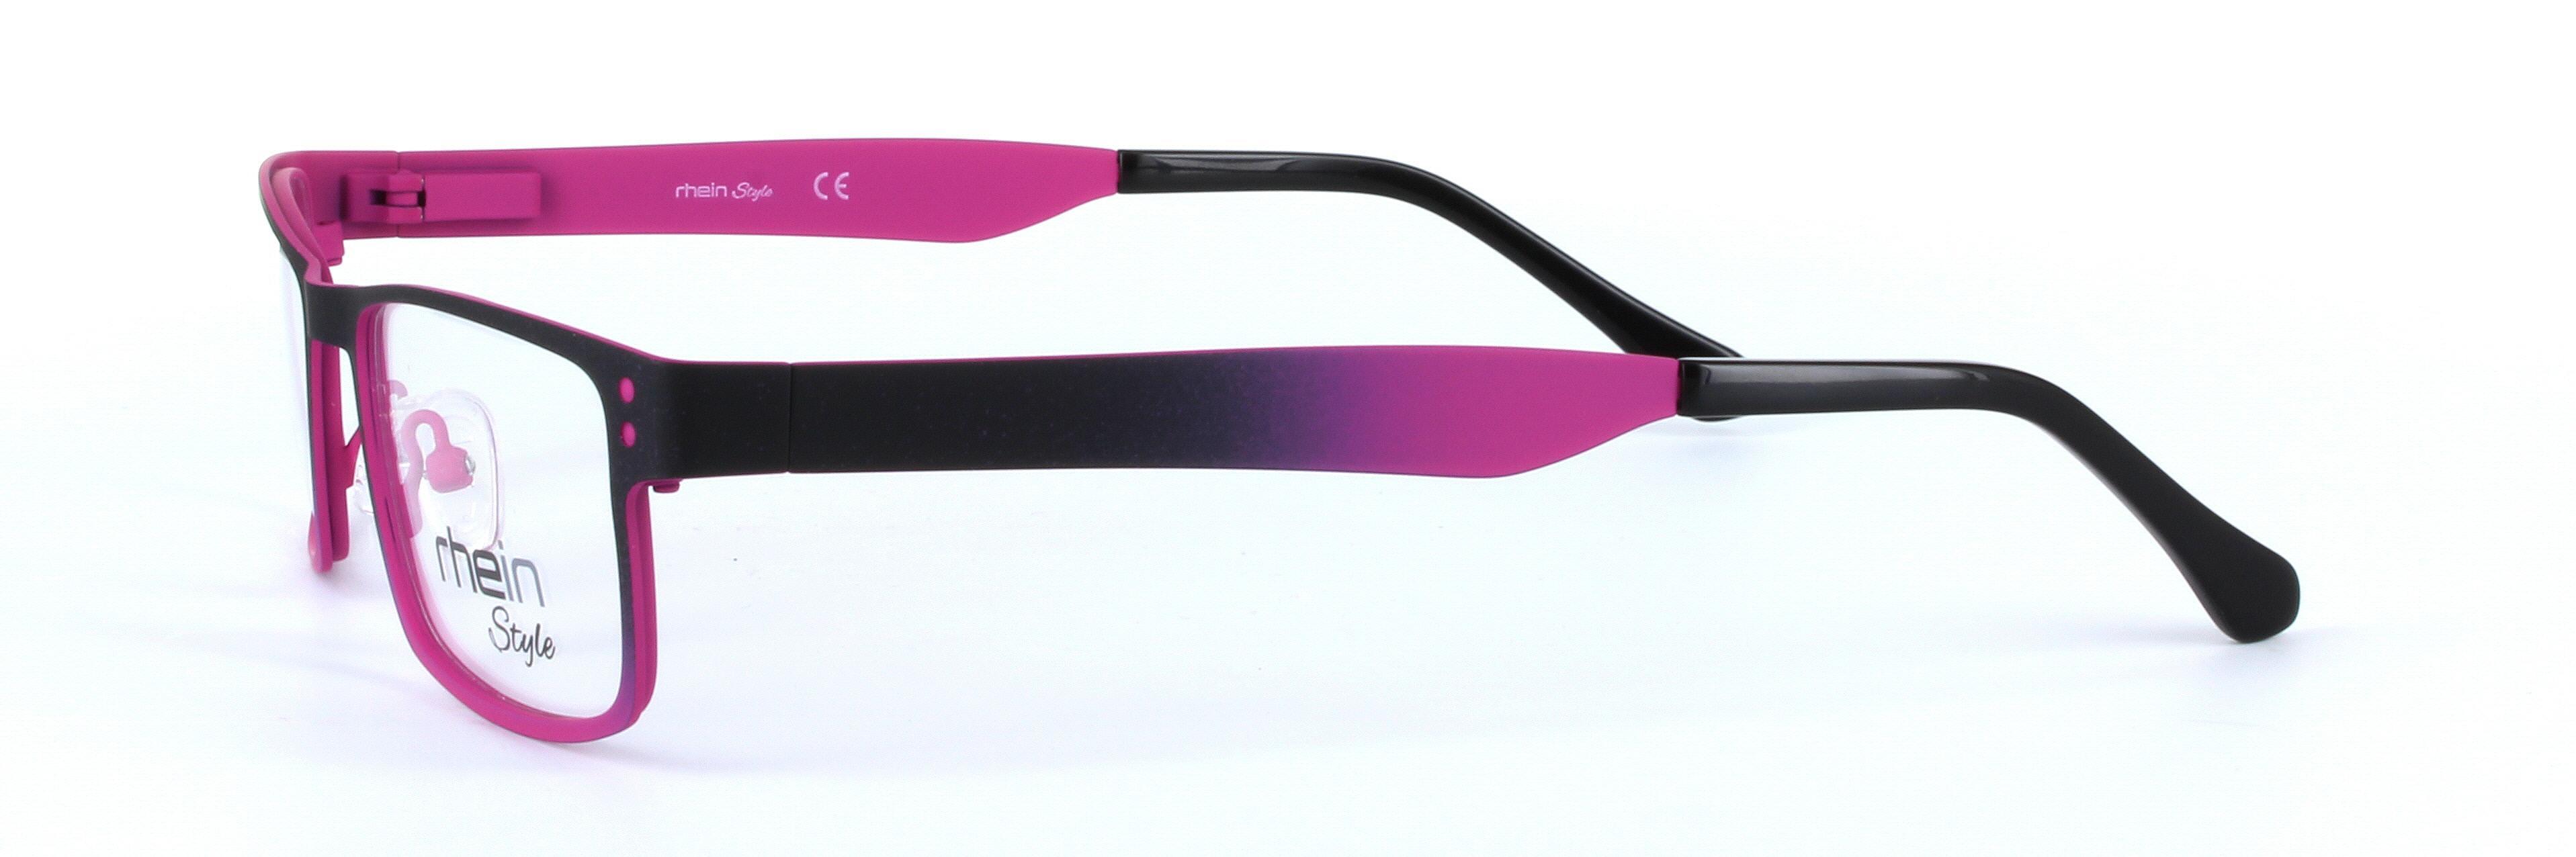 Ambleside Black and Pink Full Rim Rectangular Metal Glasses - Image View 2